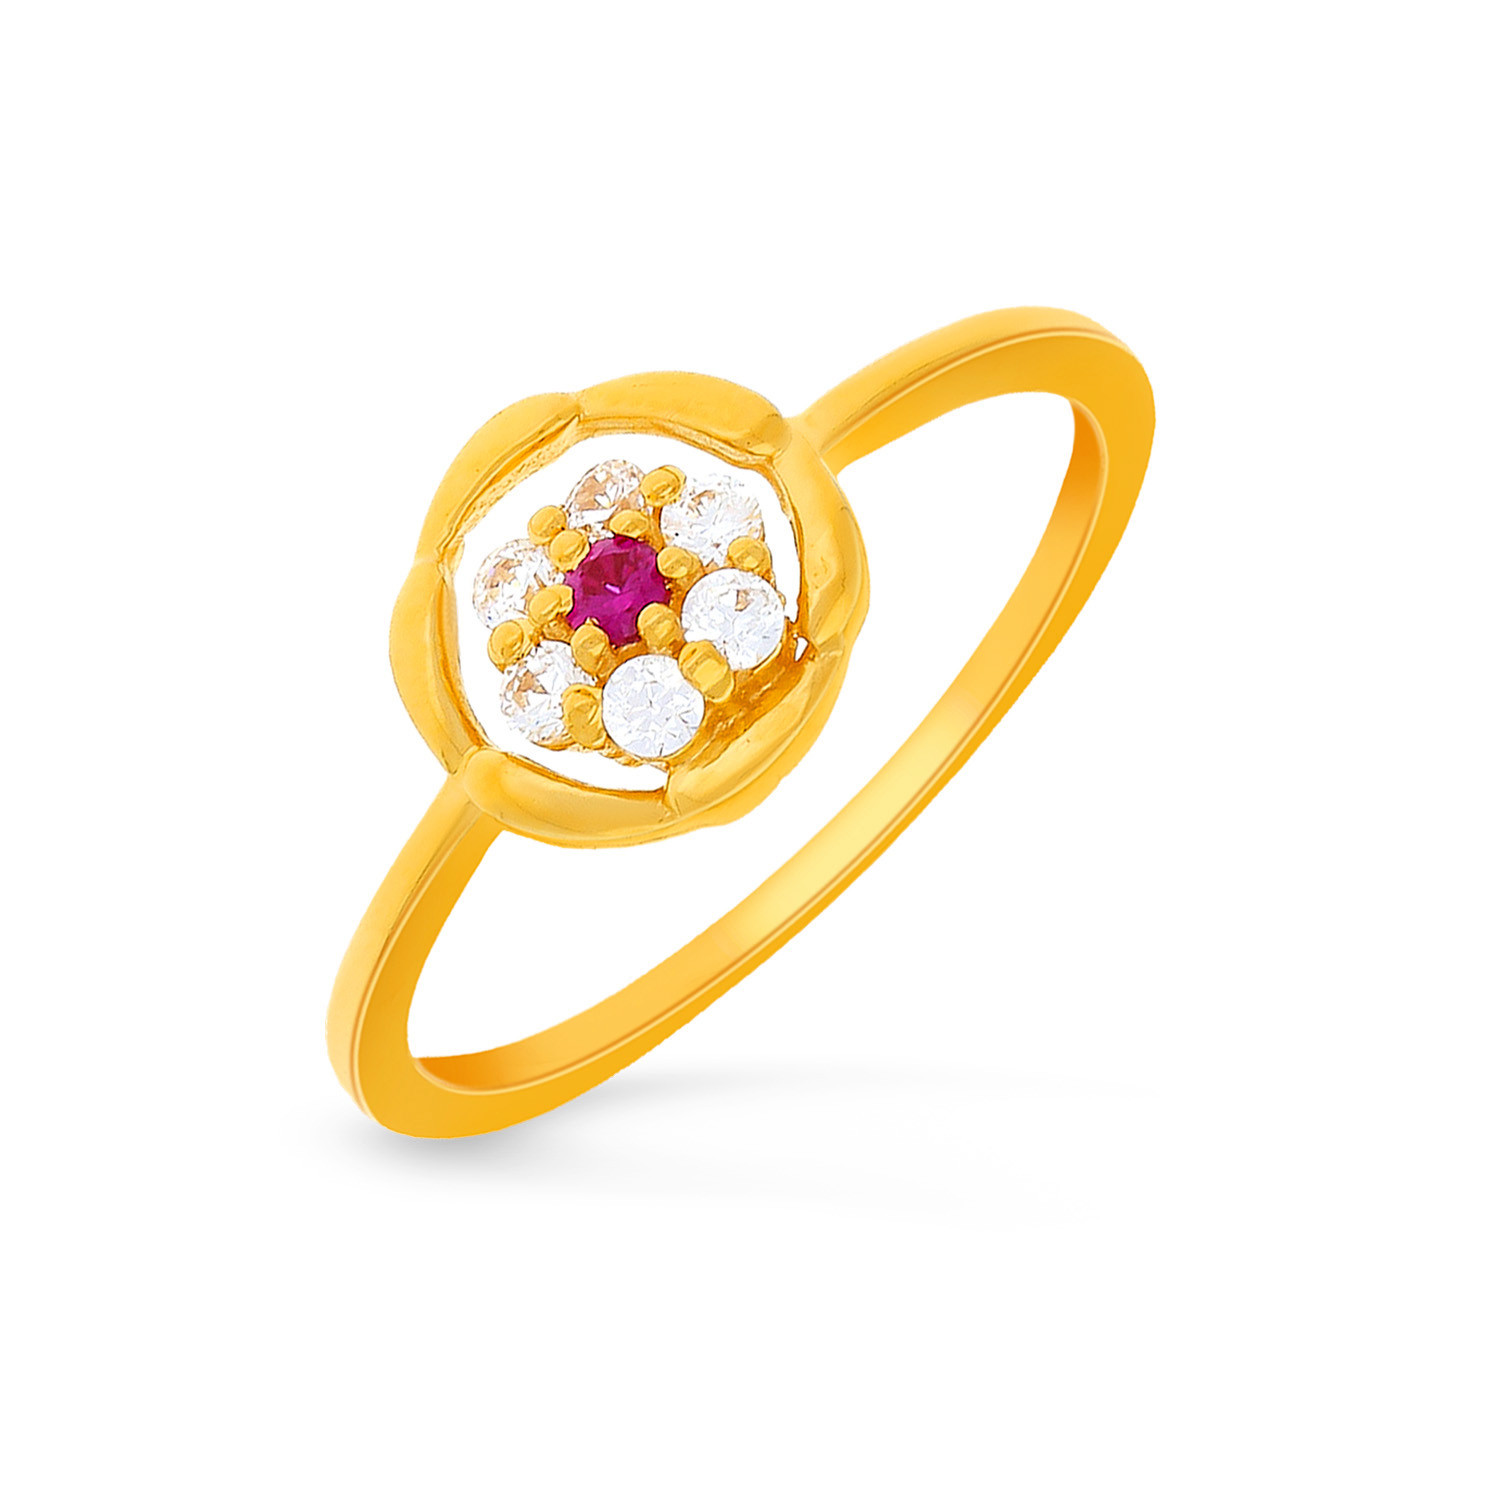 Buy Malabar Gold & Diamonds 22KT Yellow Gold Ring for Men at Amazon.in